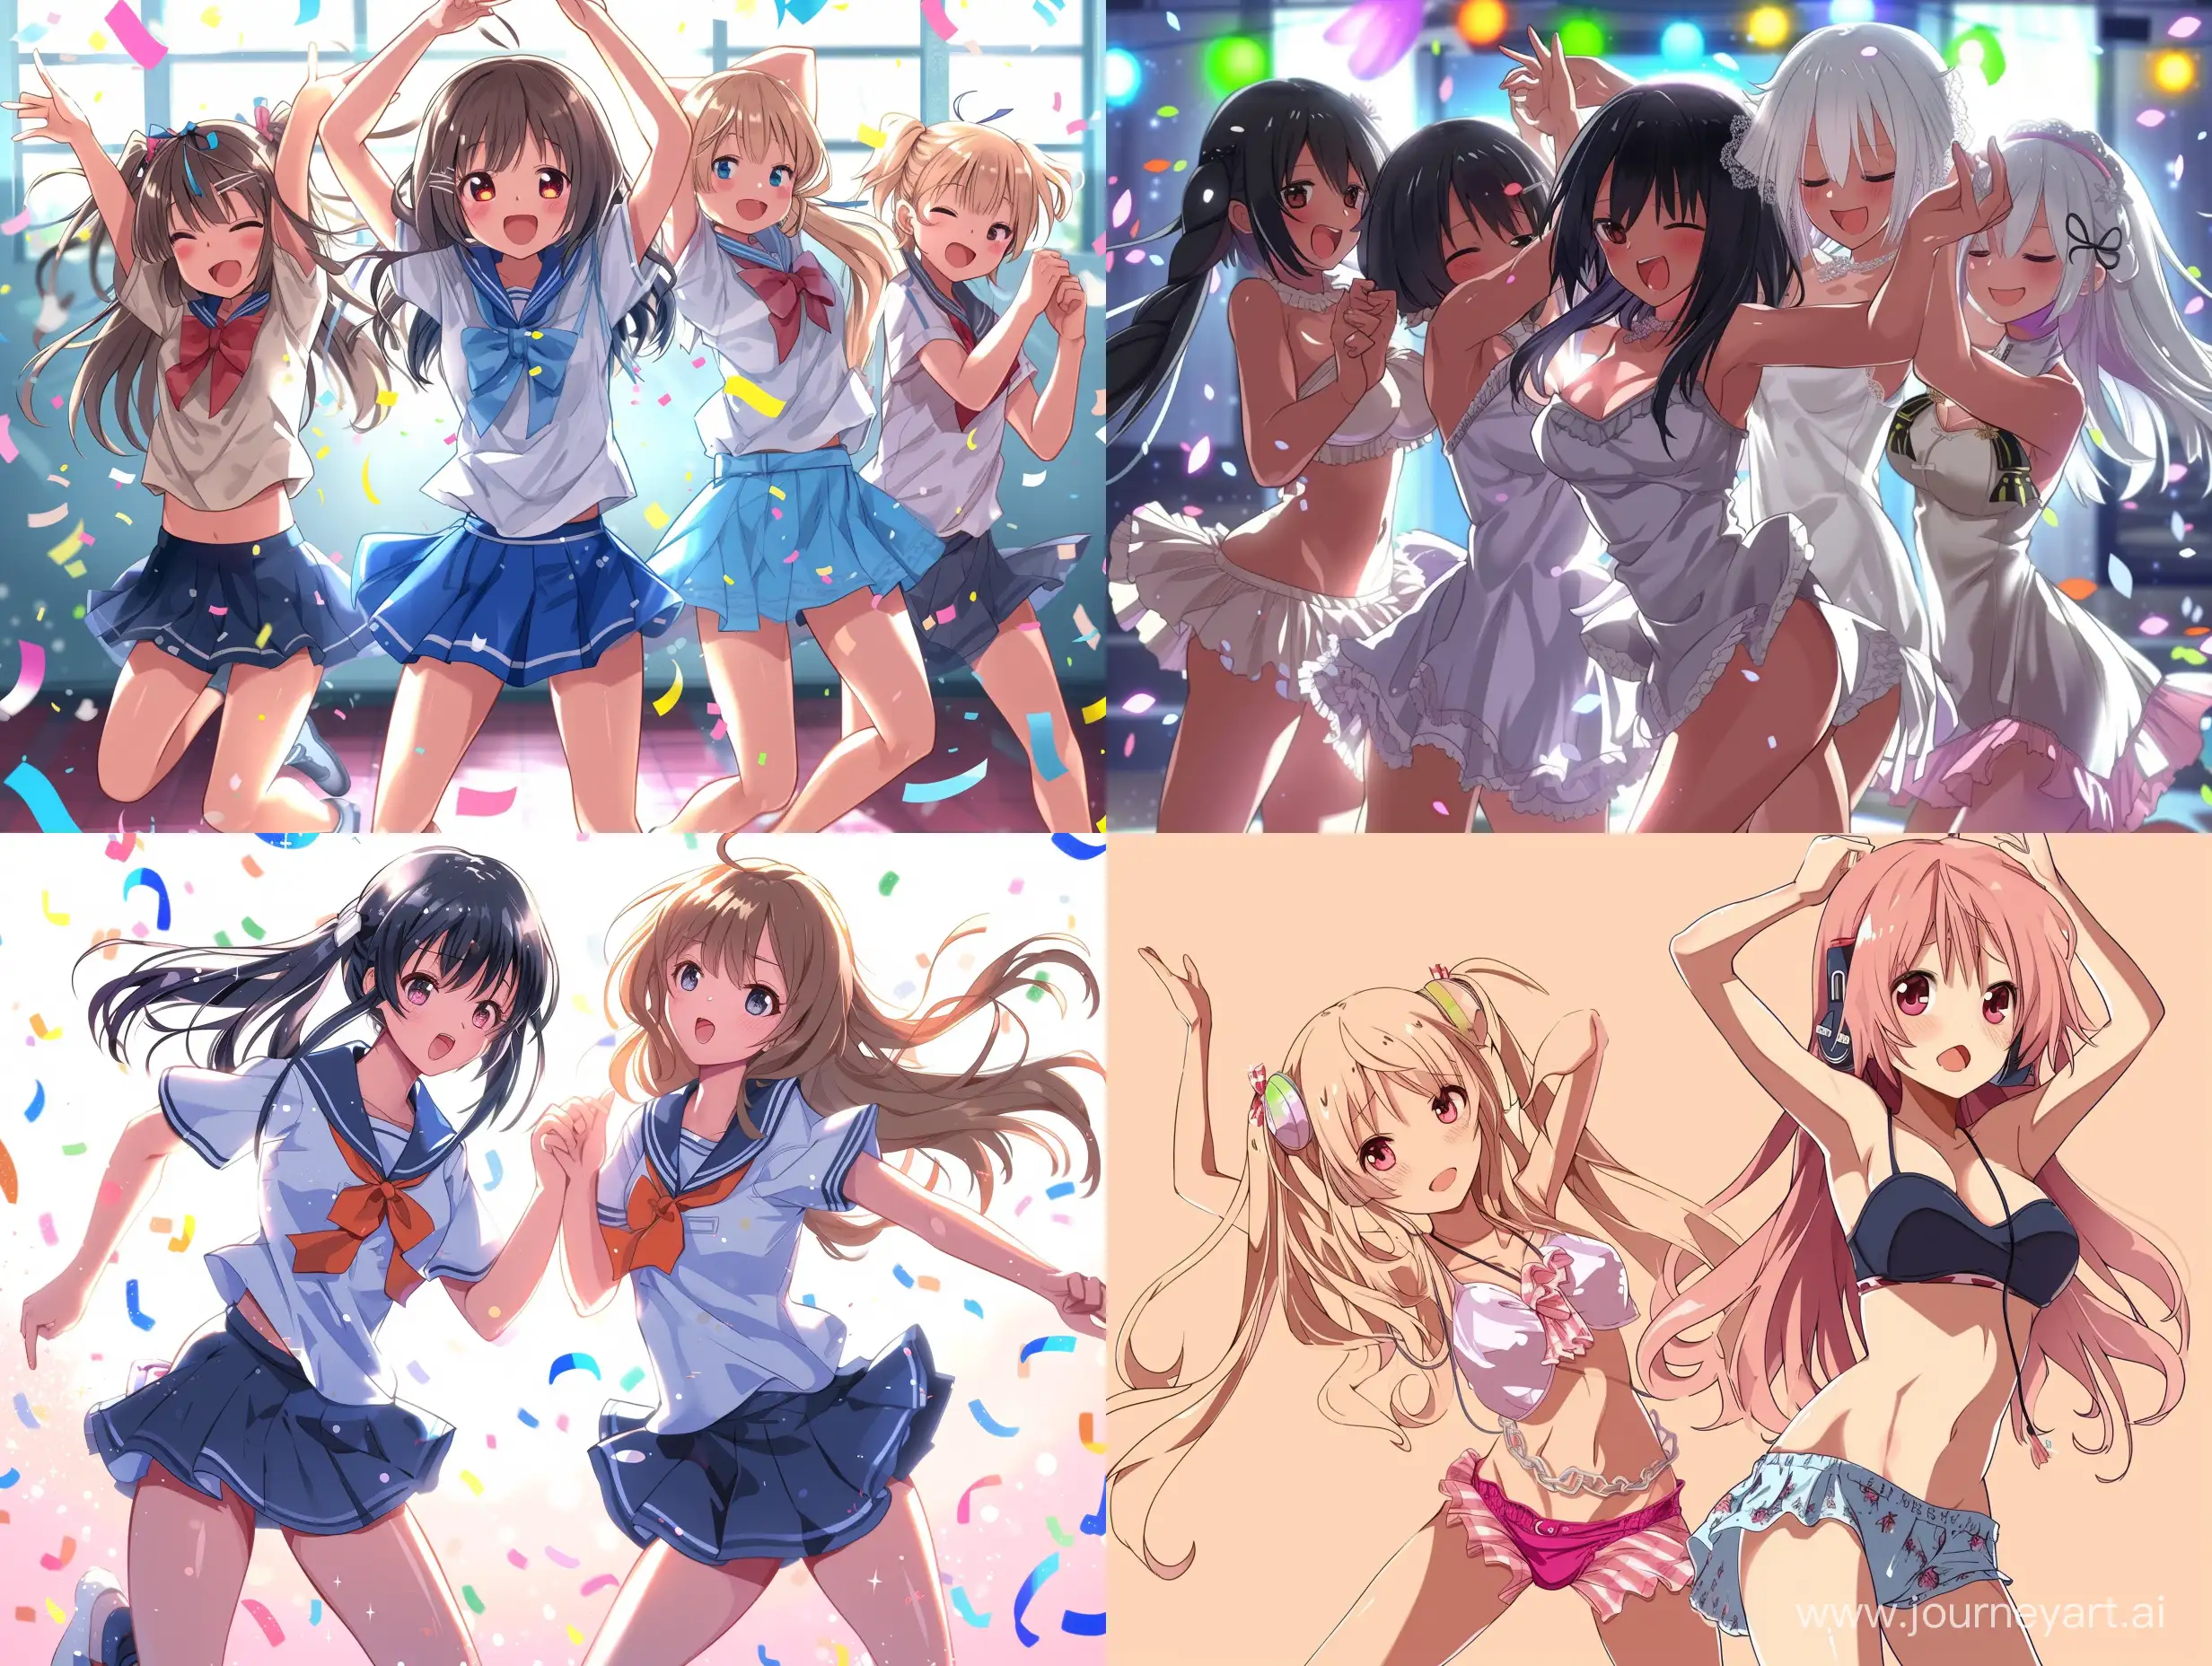 Enchanting-Anime-Girls-Dance-in-43-Aspect-Ratio-Vibrant-Elegance